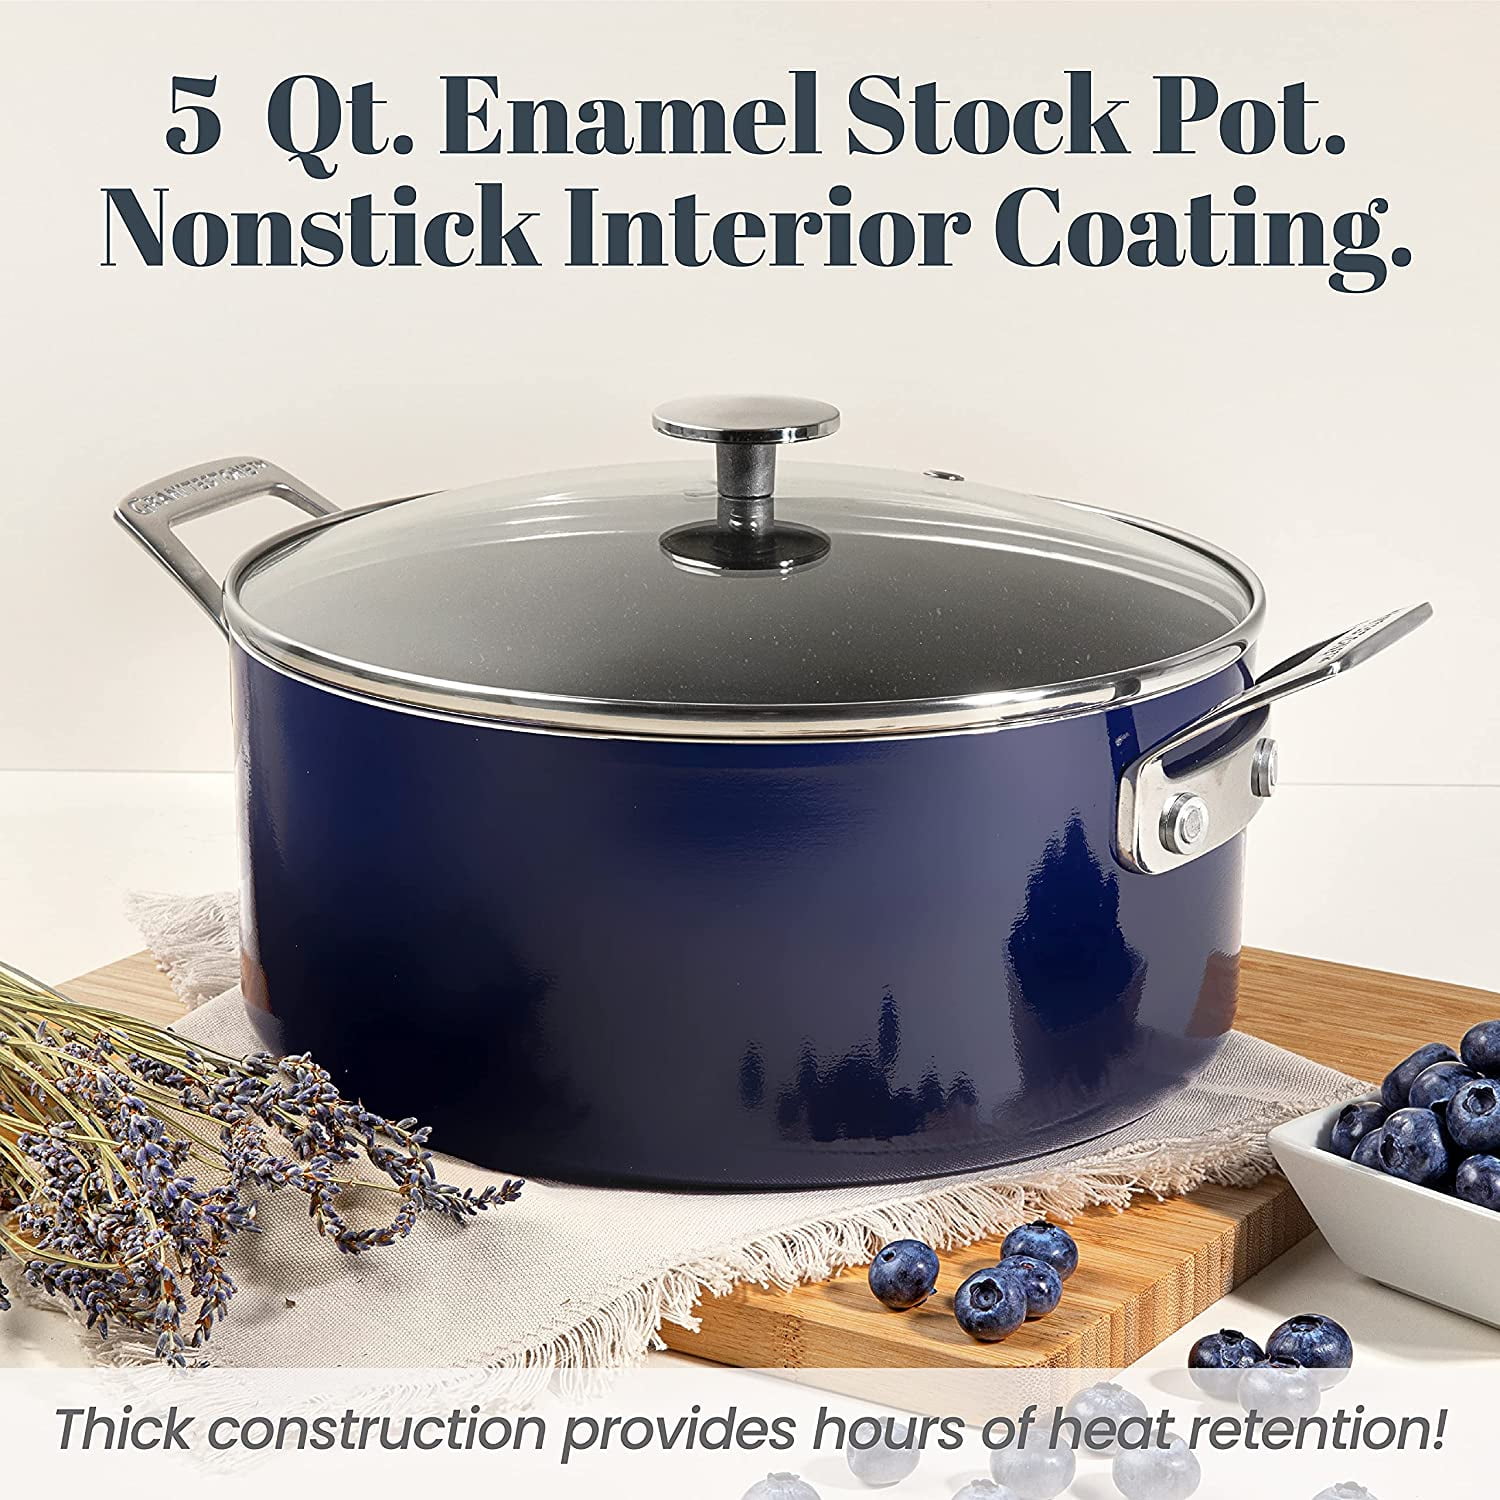 Marblestone Xylan Non-Stick 5 Quart Stock Pot with Lid – Eco +